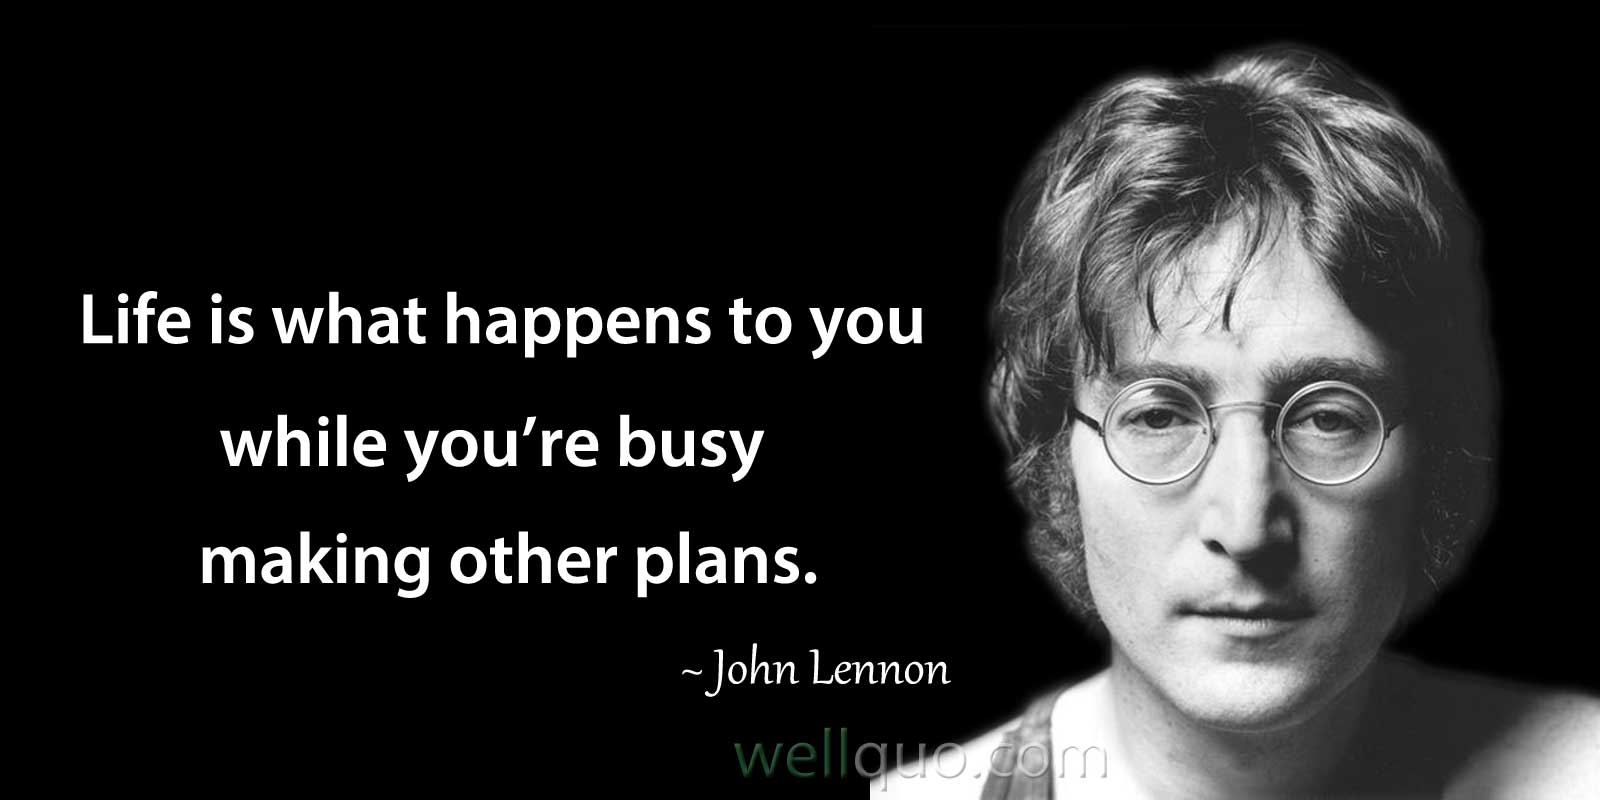 John Lennon Quotes Well Quo